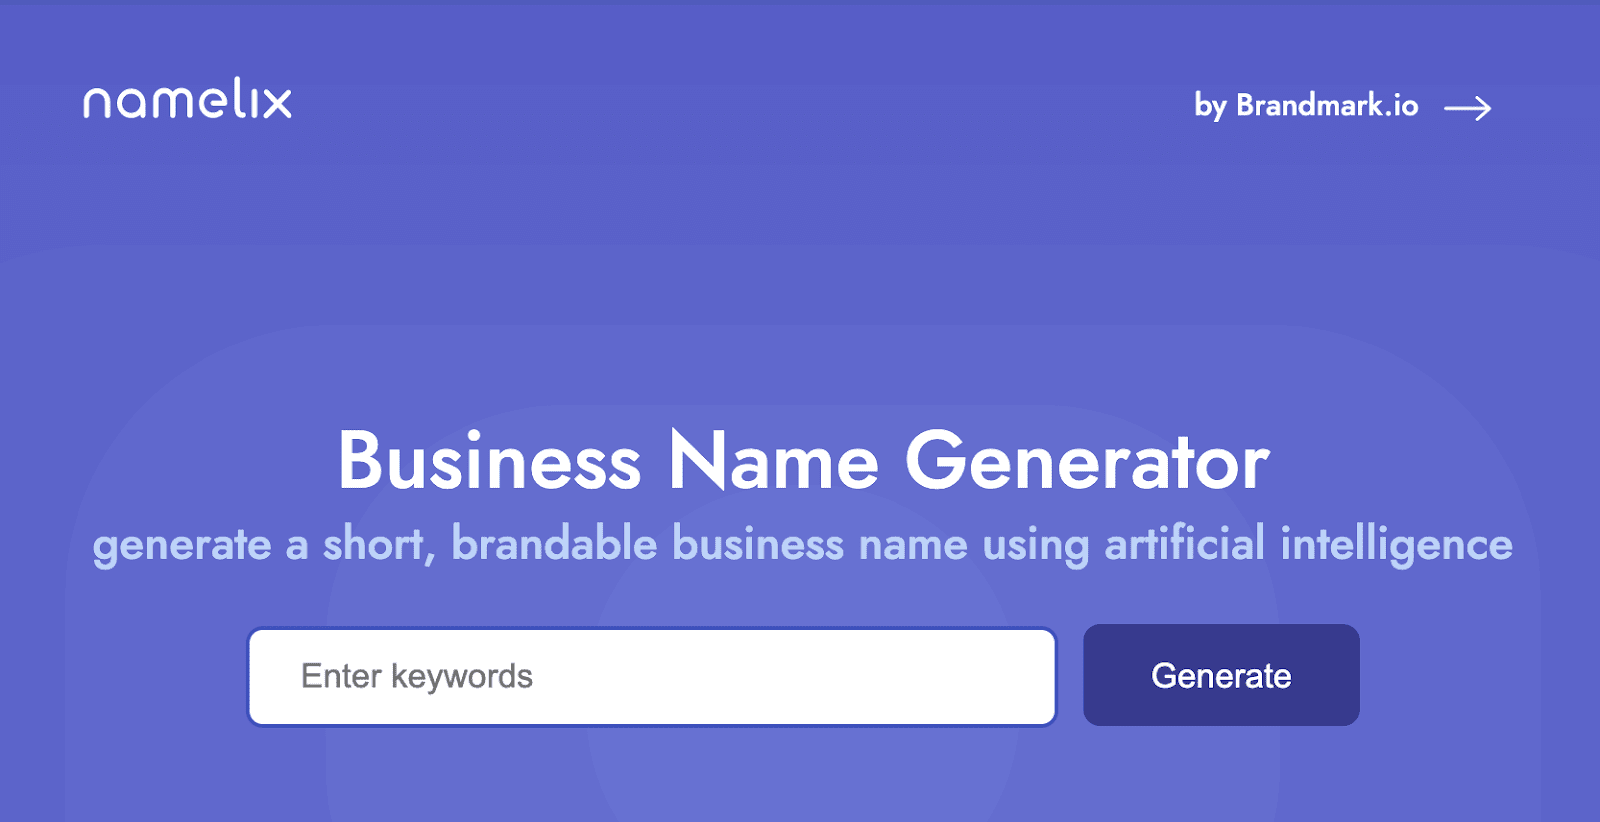 Shopify business name generator. Namelix. Namelix нейросеть. Бренд нейм Генератор. Naming Generator.